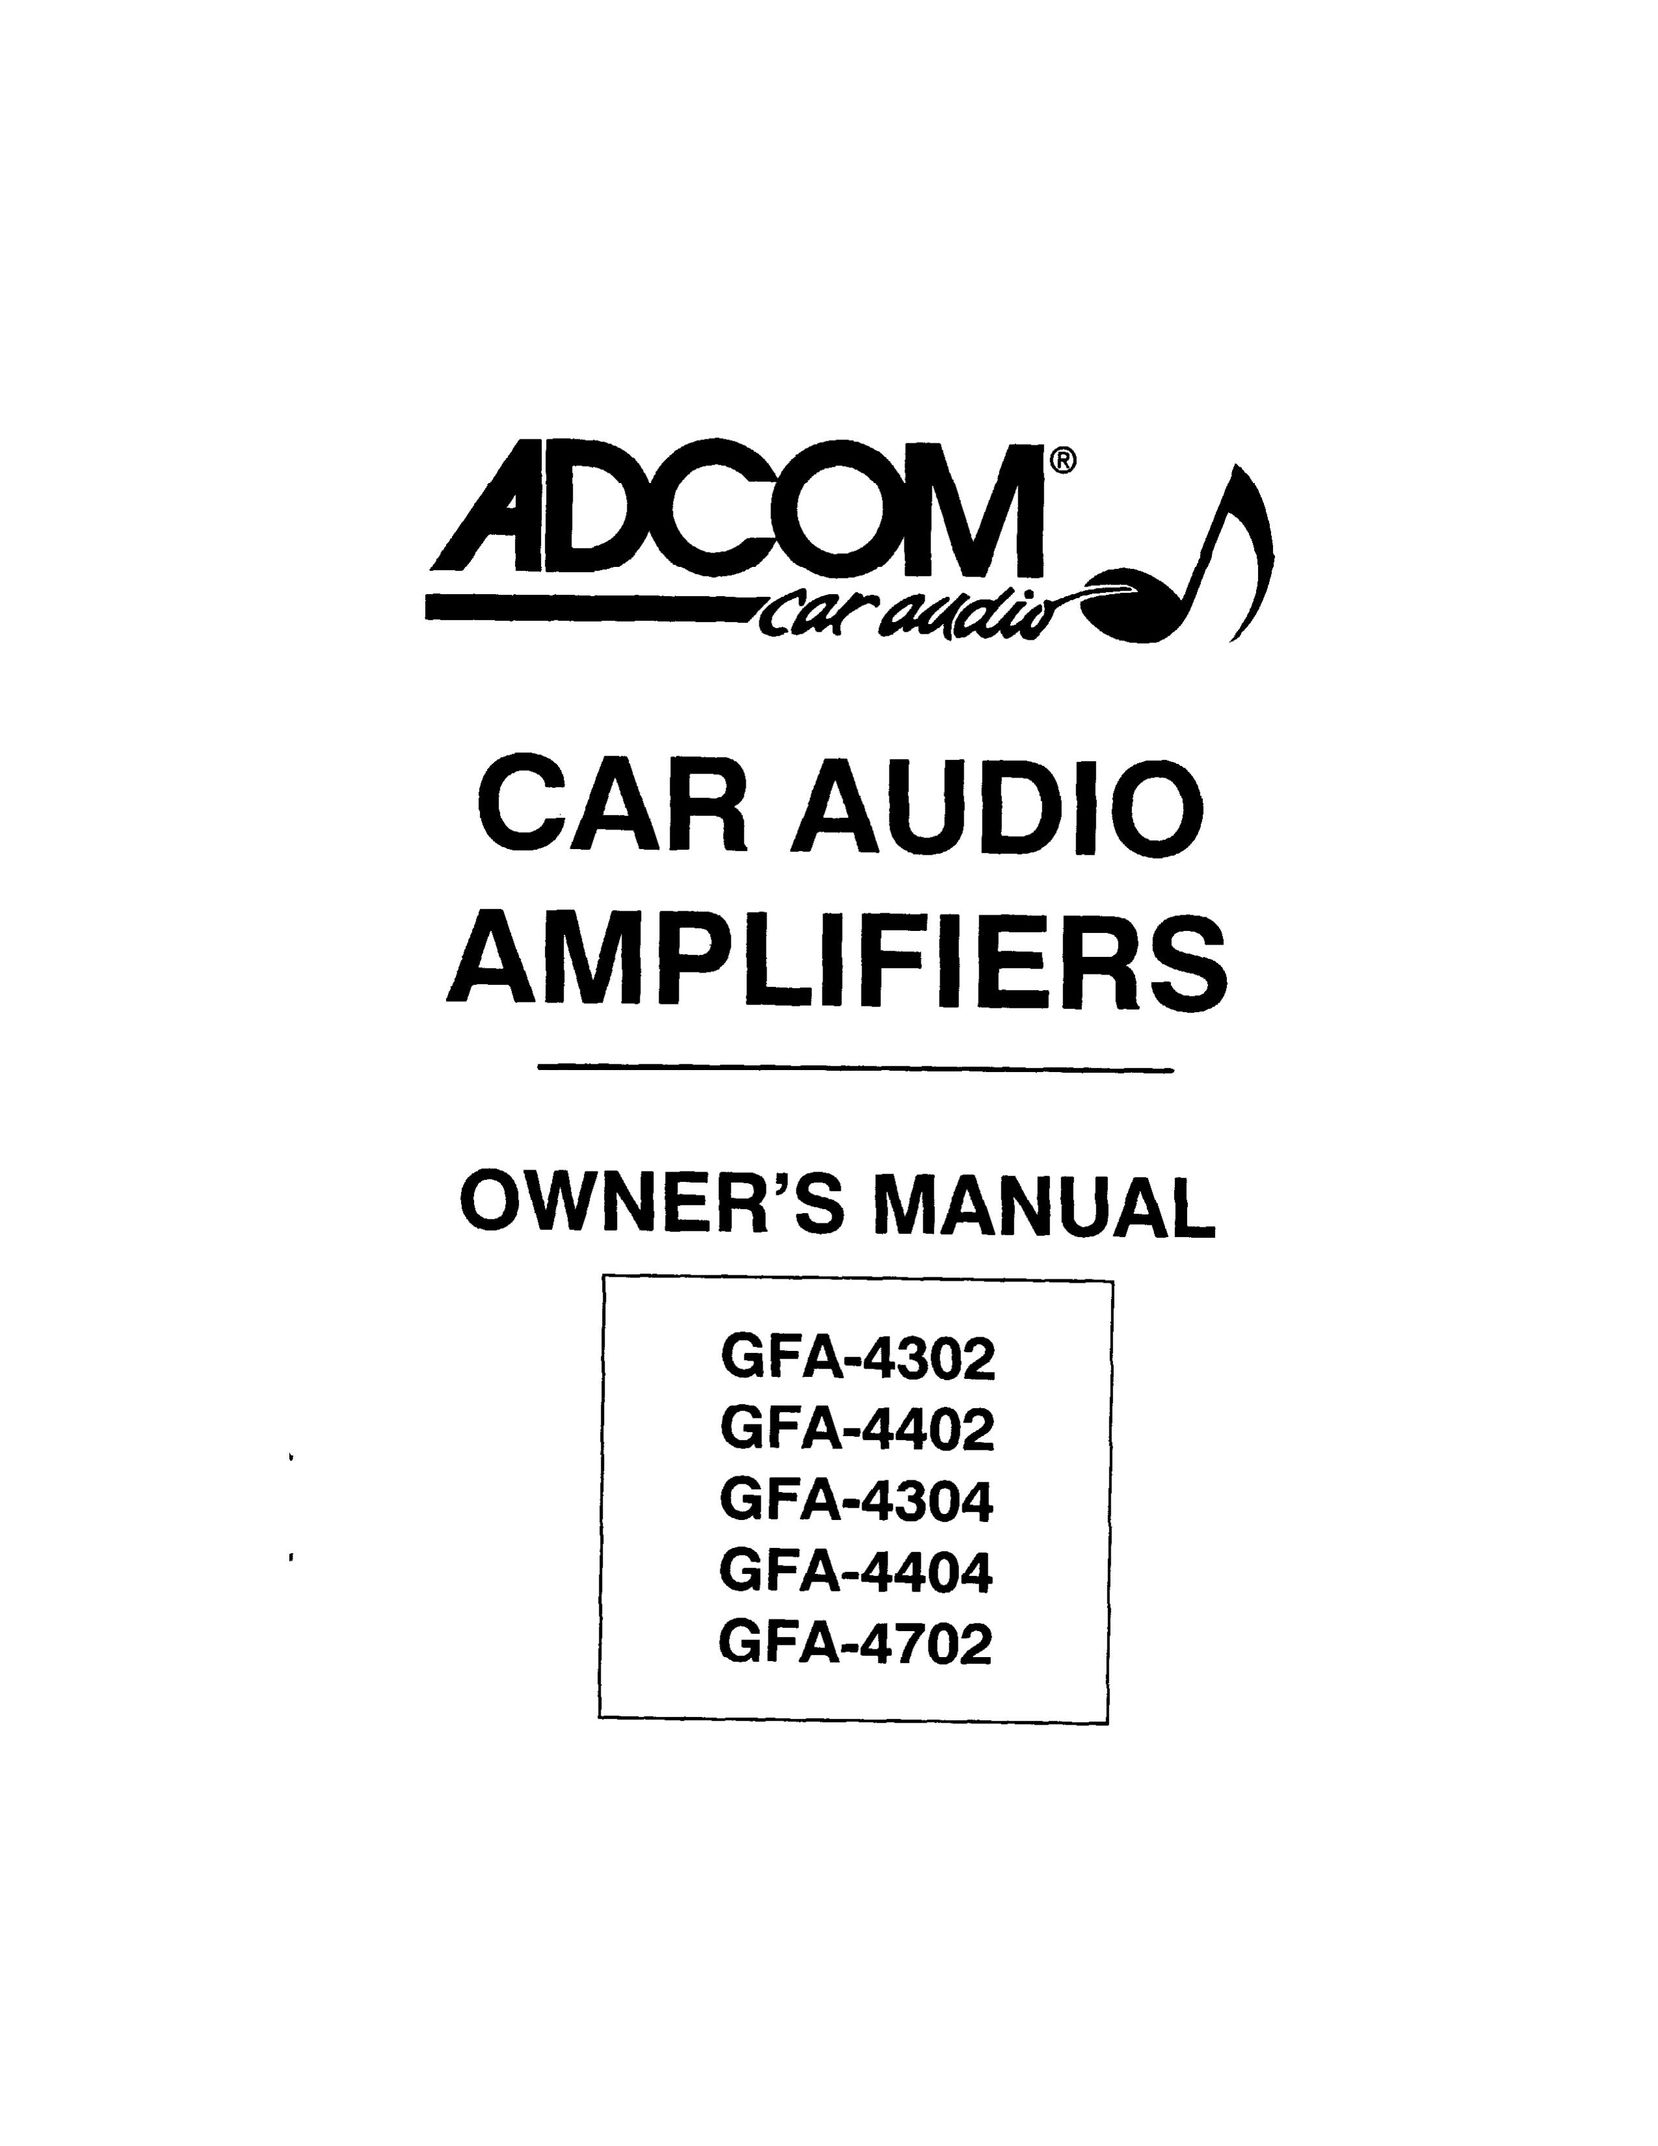 Adcom GFA-4304 Car Amplifier User Manual